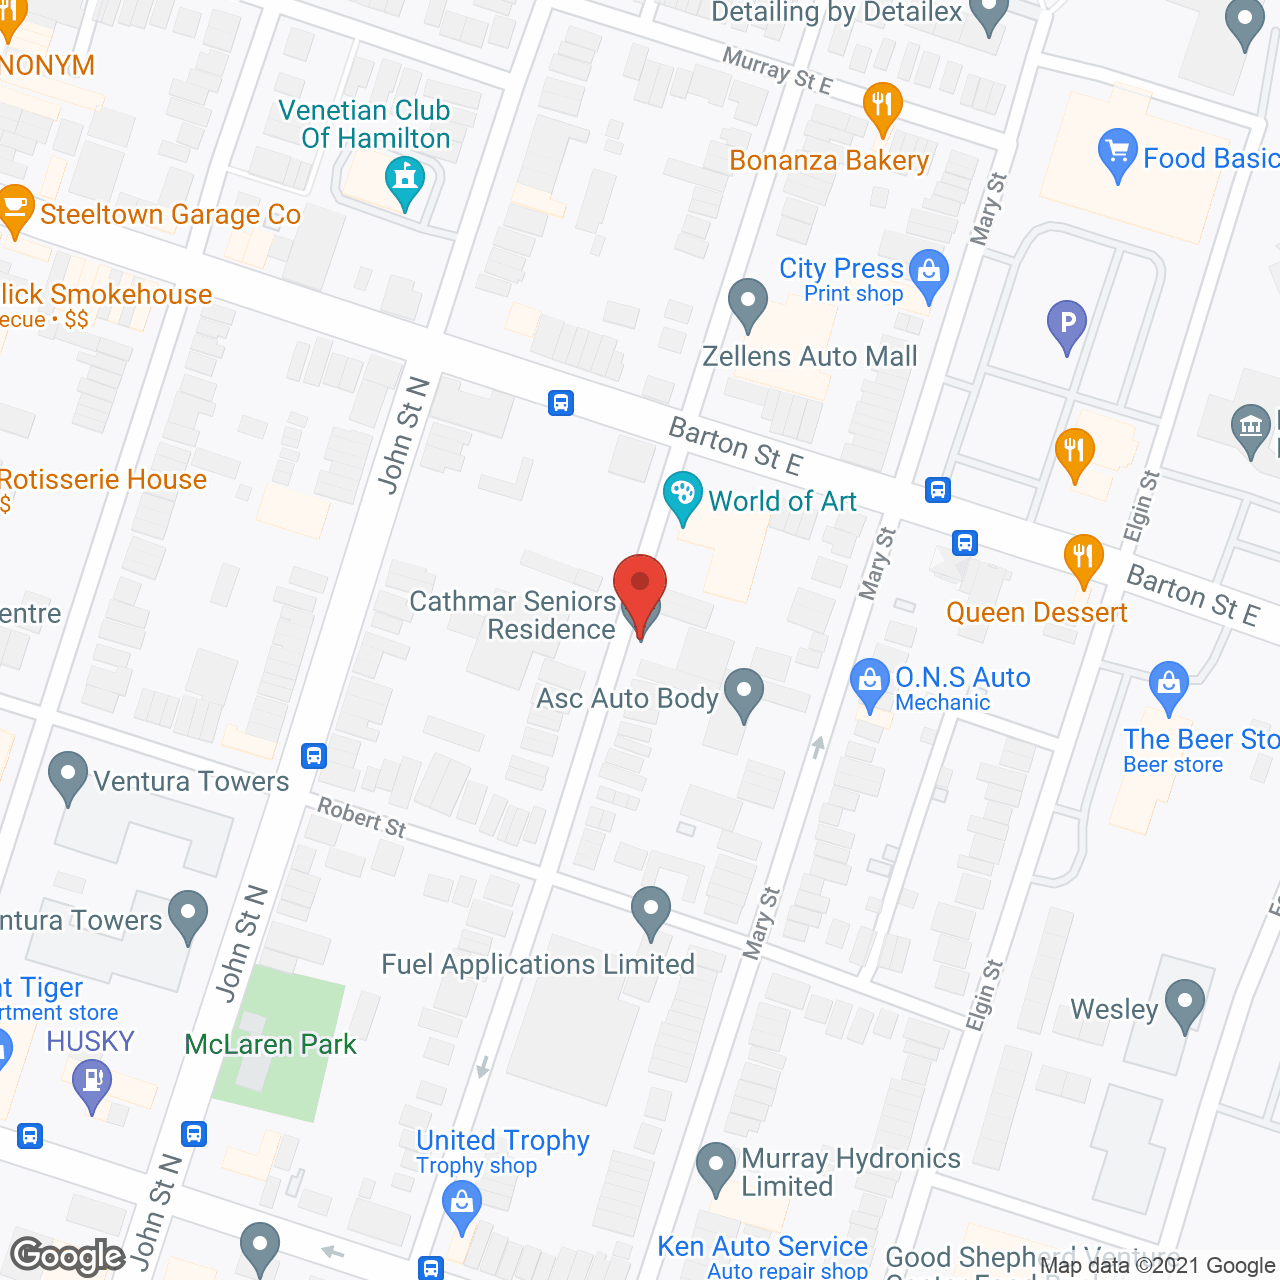 Cathmar Manor in google map